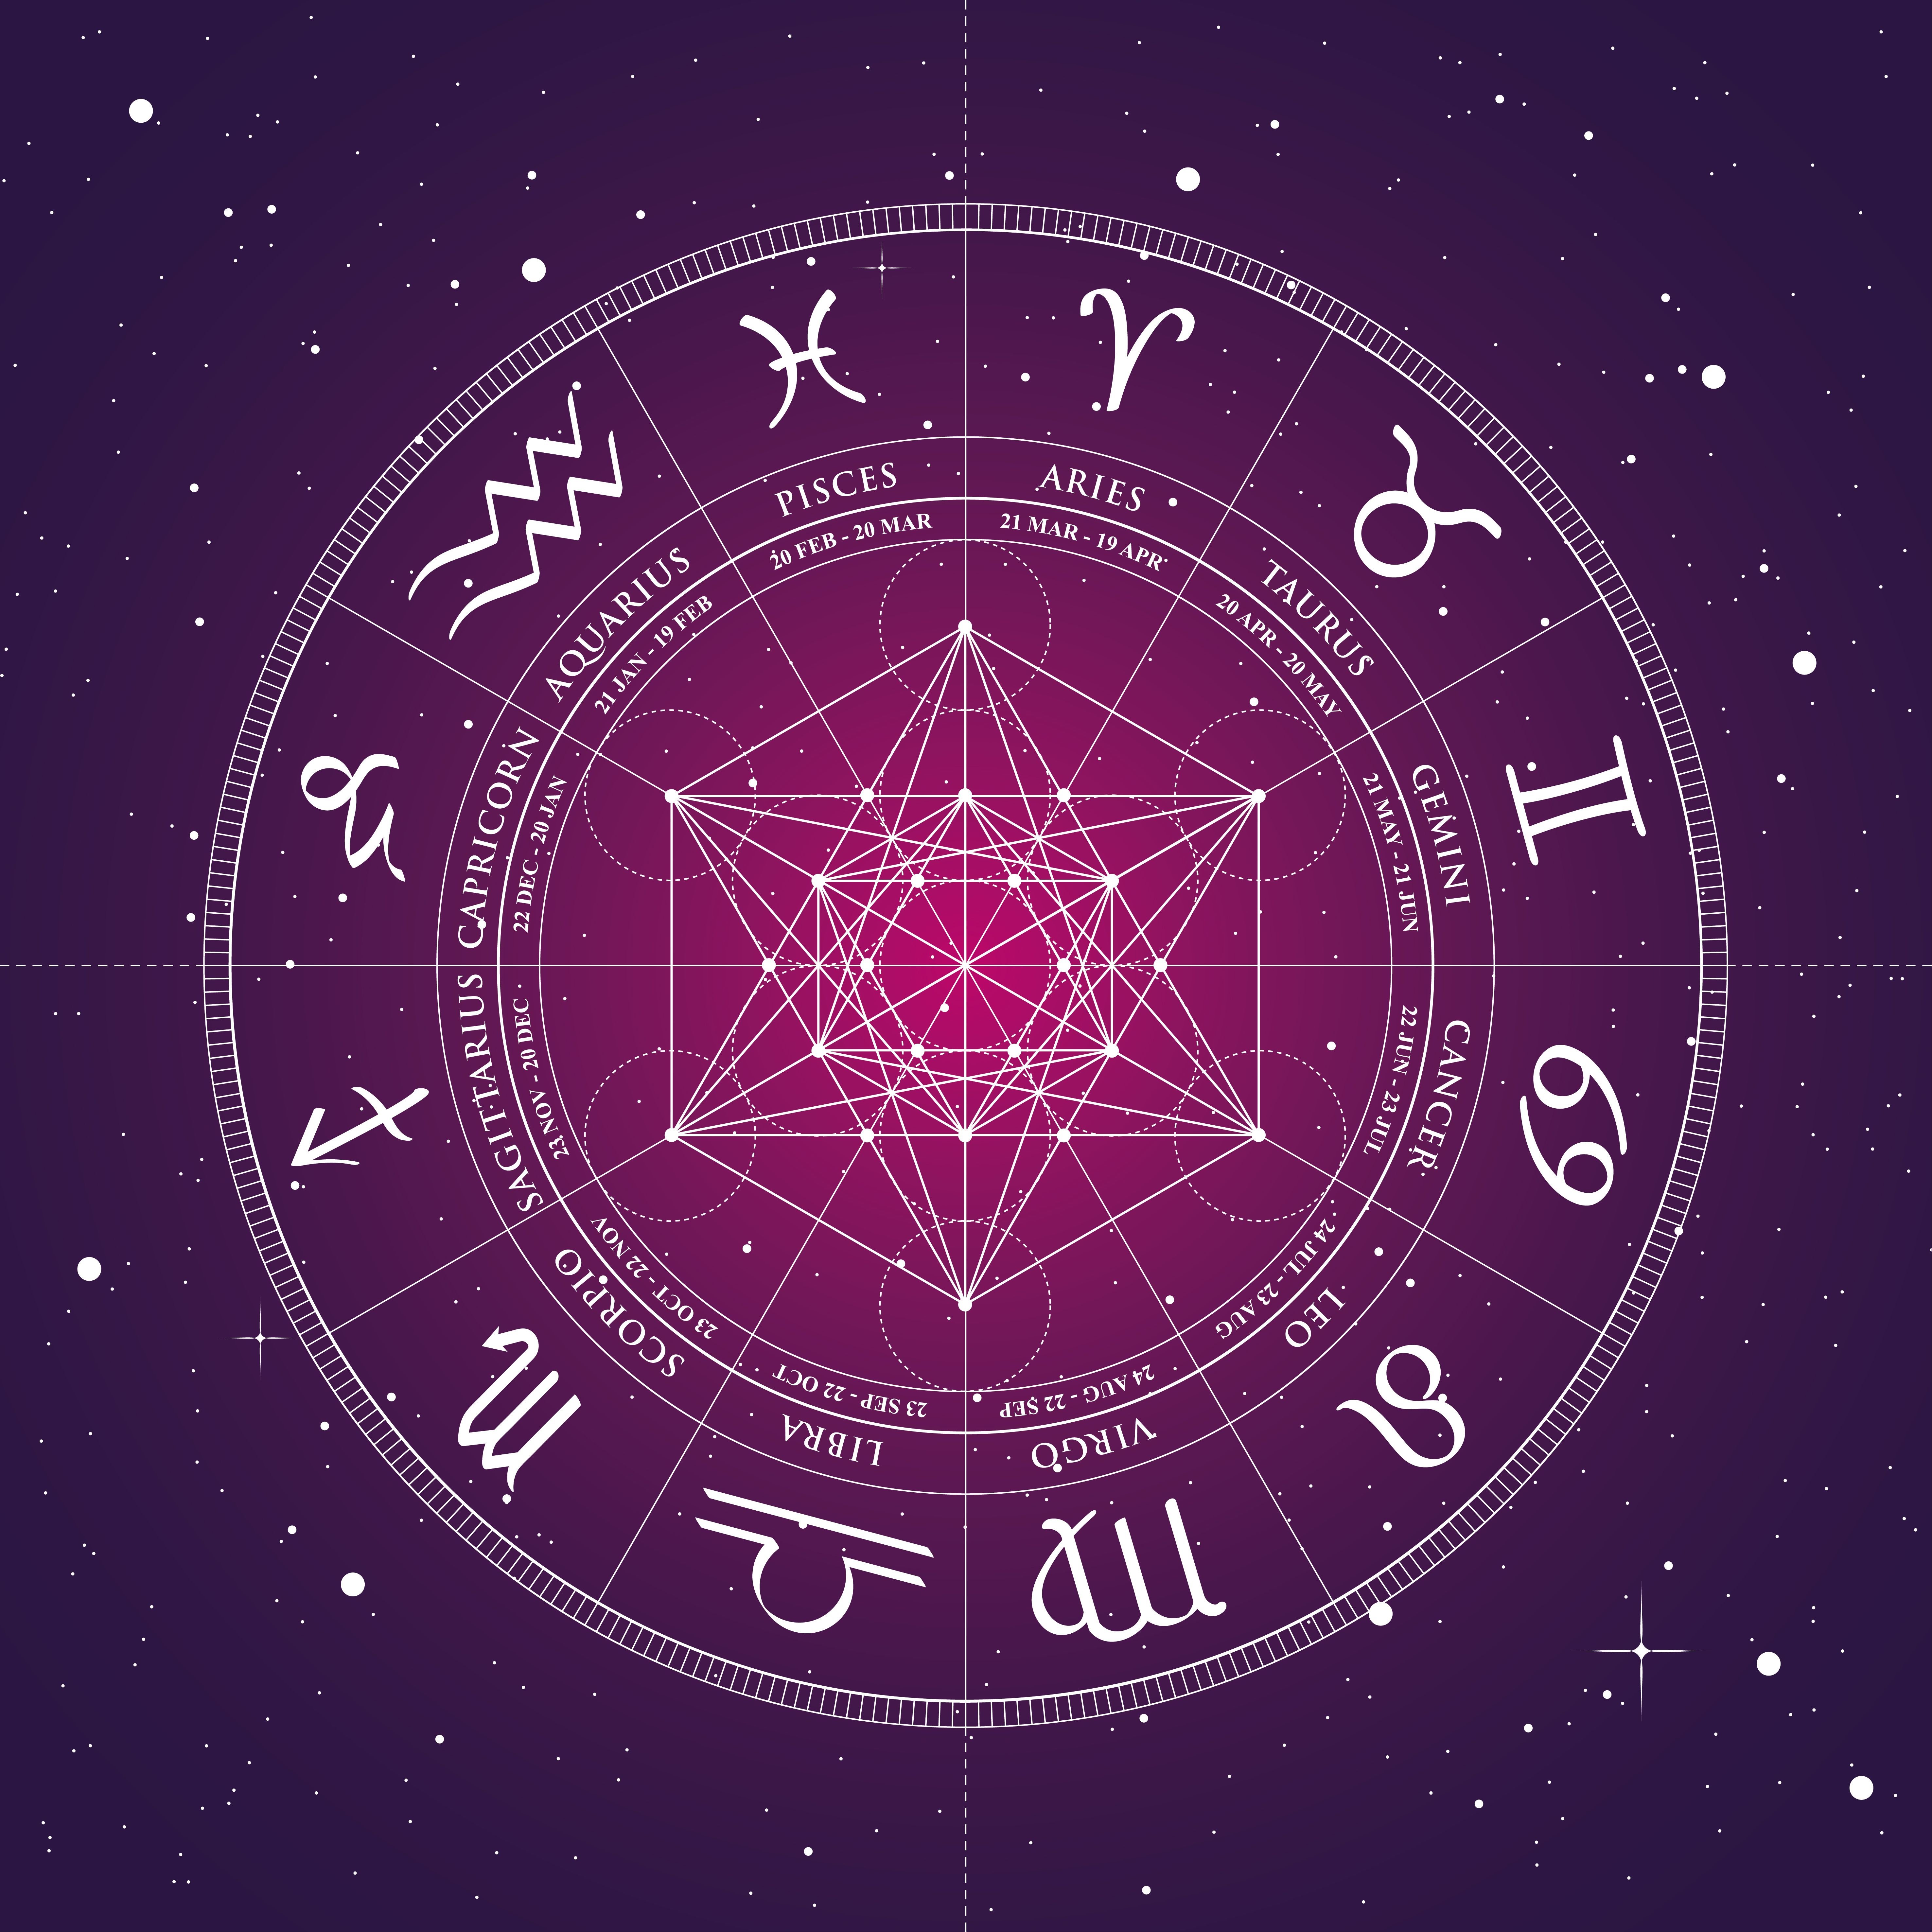 Zodiac signs in a circle. | Source: Shutterstock